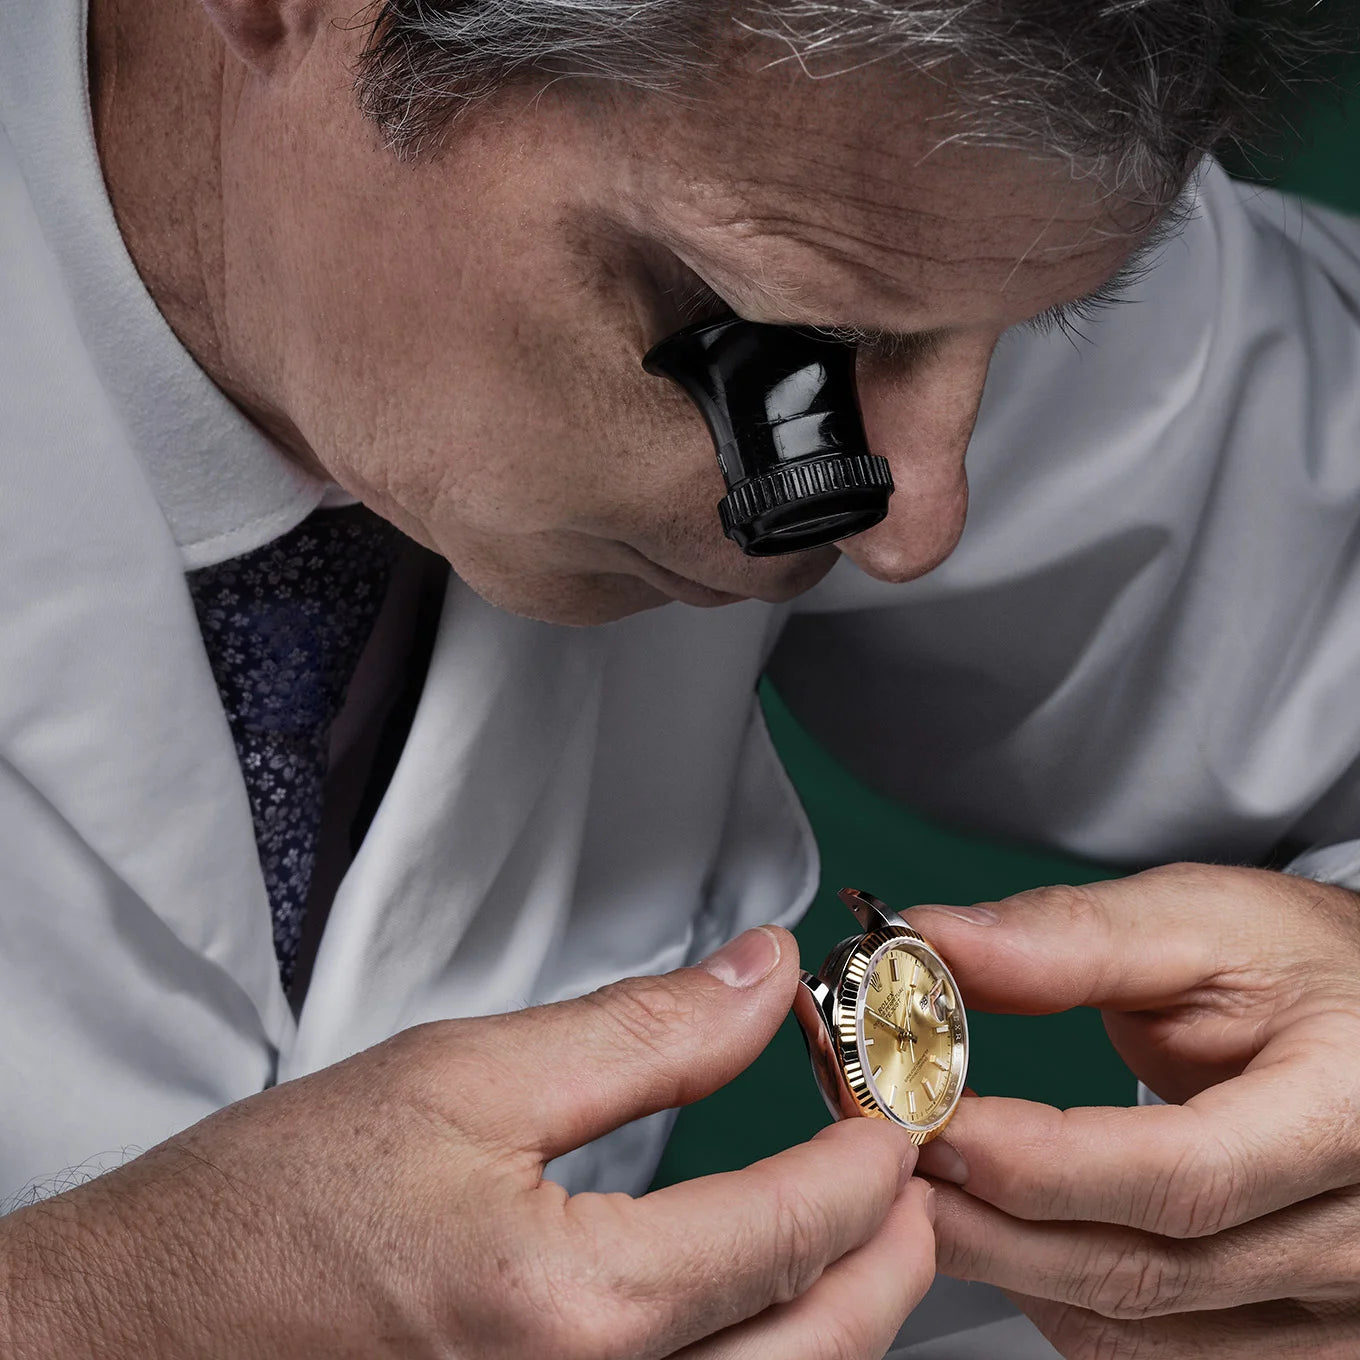 Rolex Servicing procedure at Orr's Jewelers in Sewickley, PA